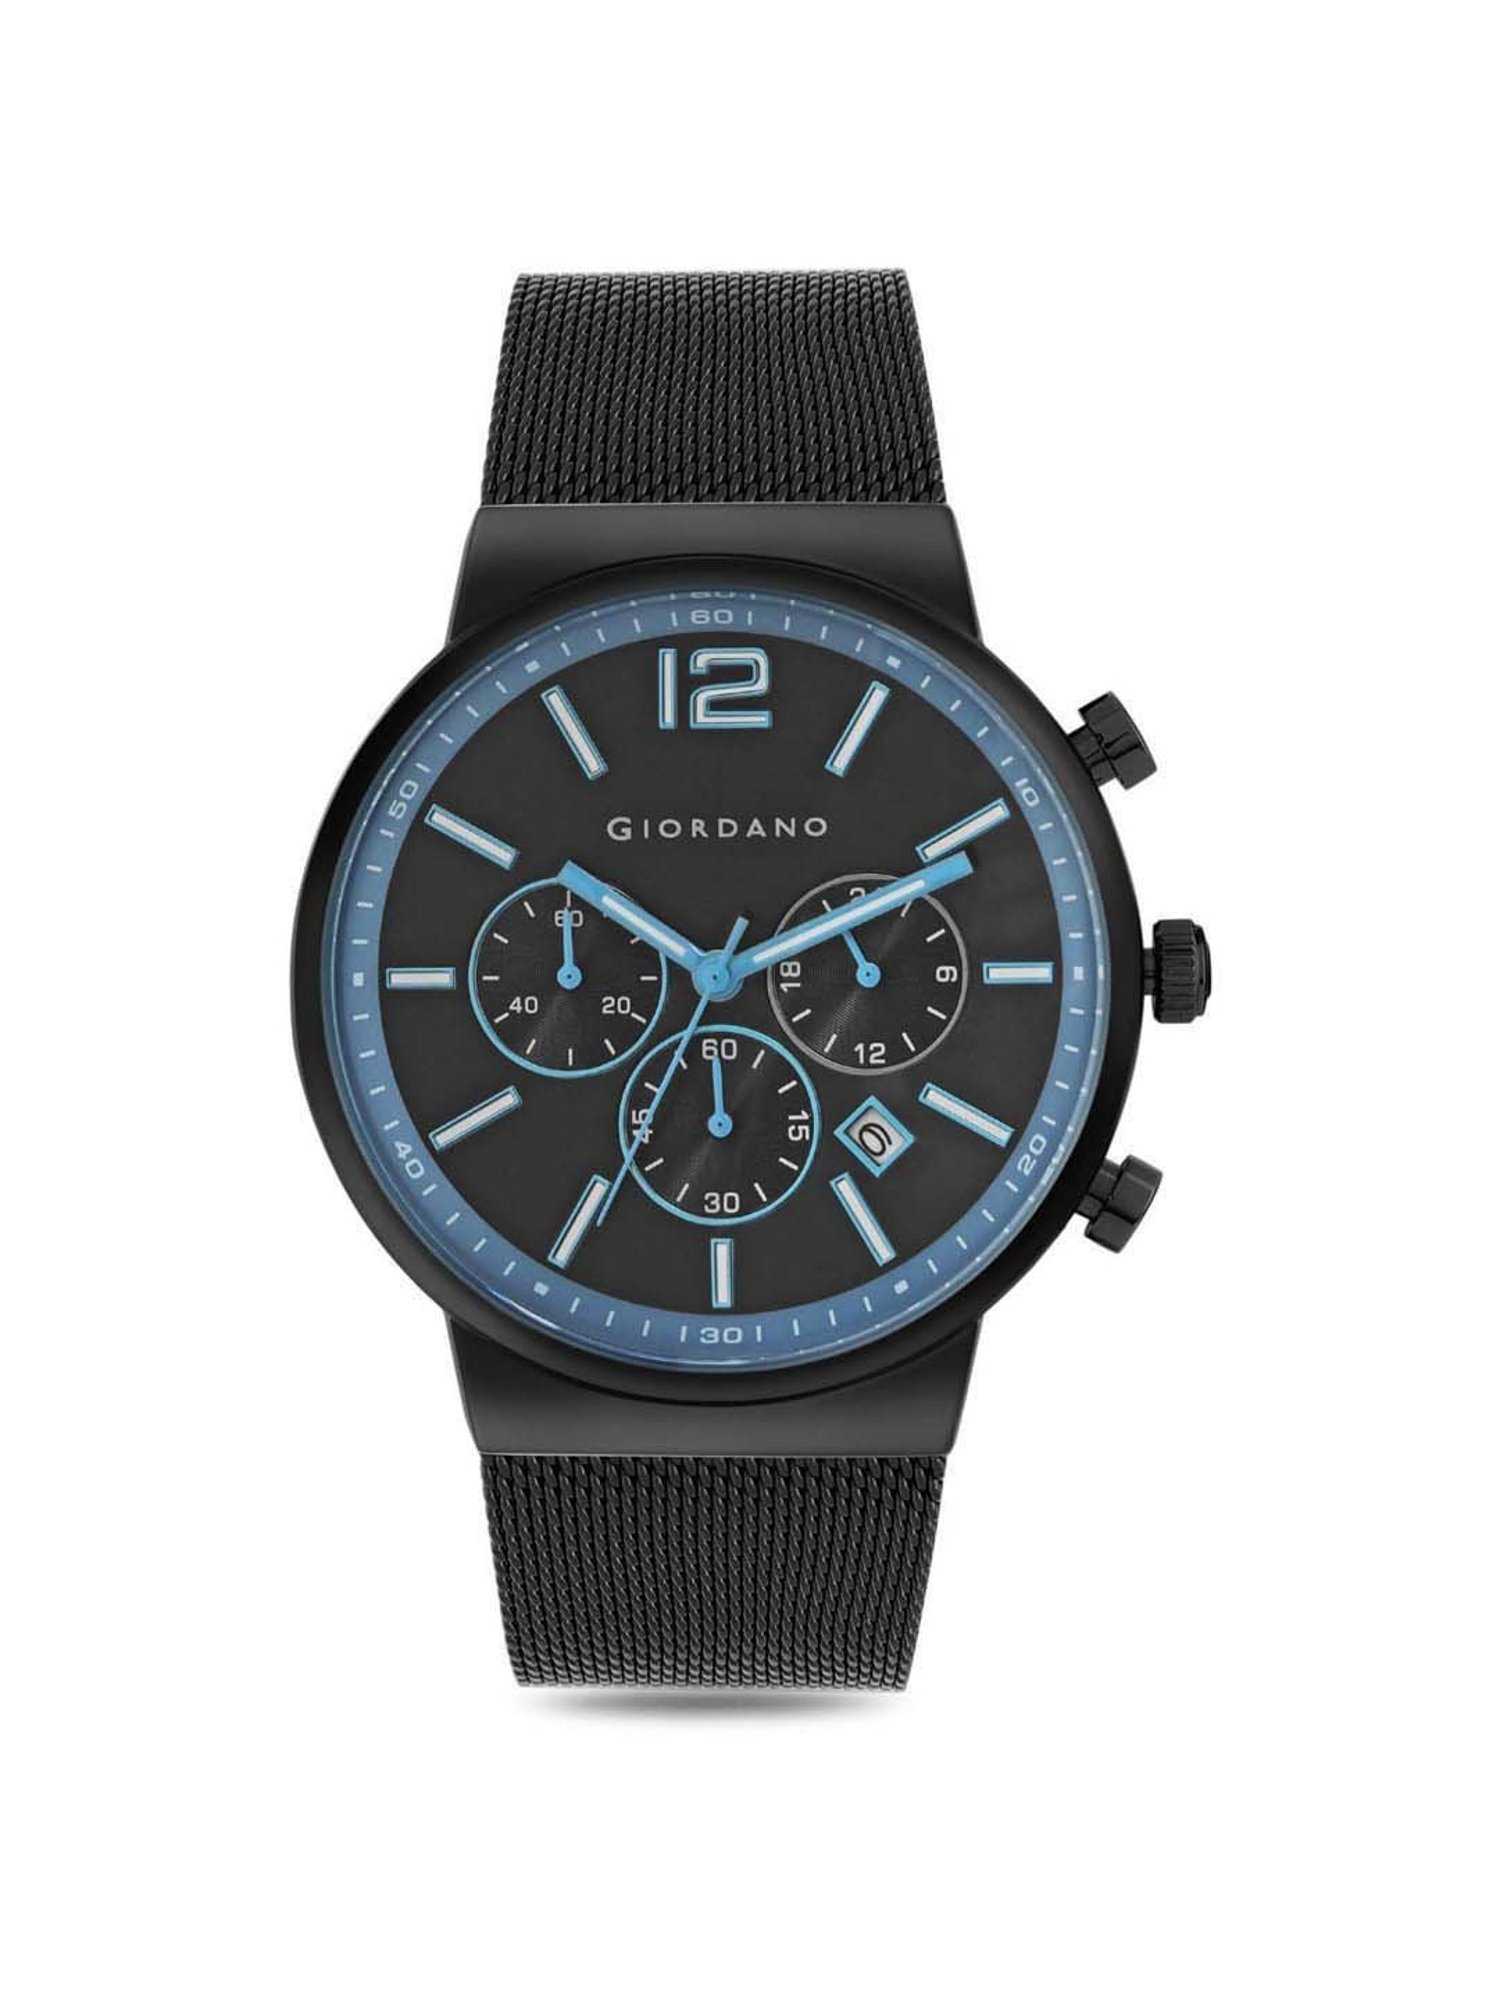 Giordano Watches - Buy Giordano Watch Online in India | Myntra